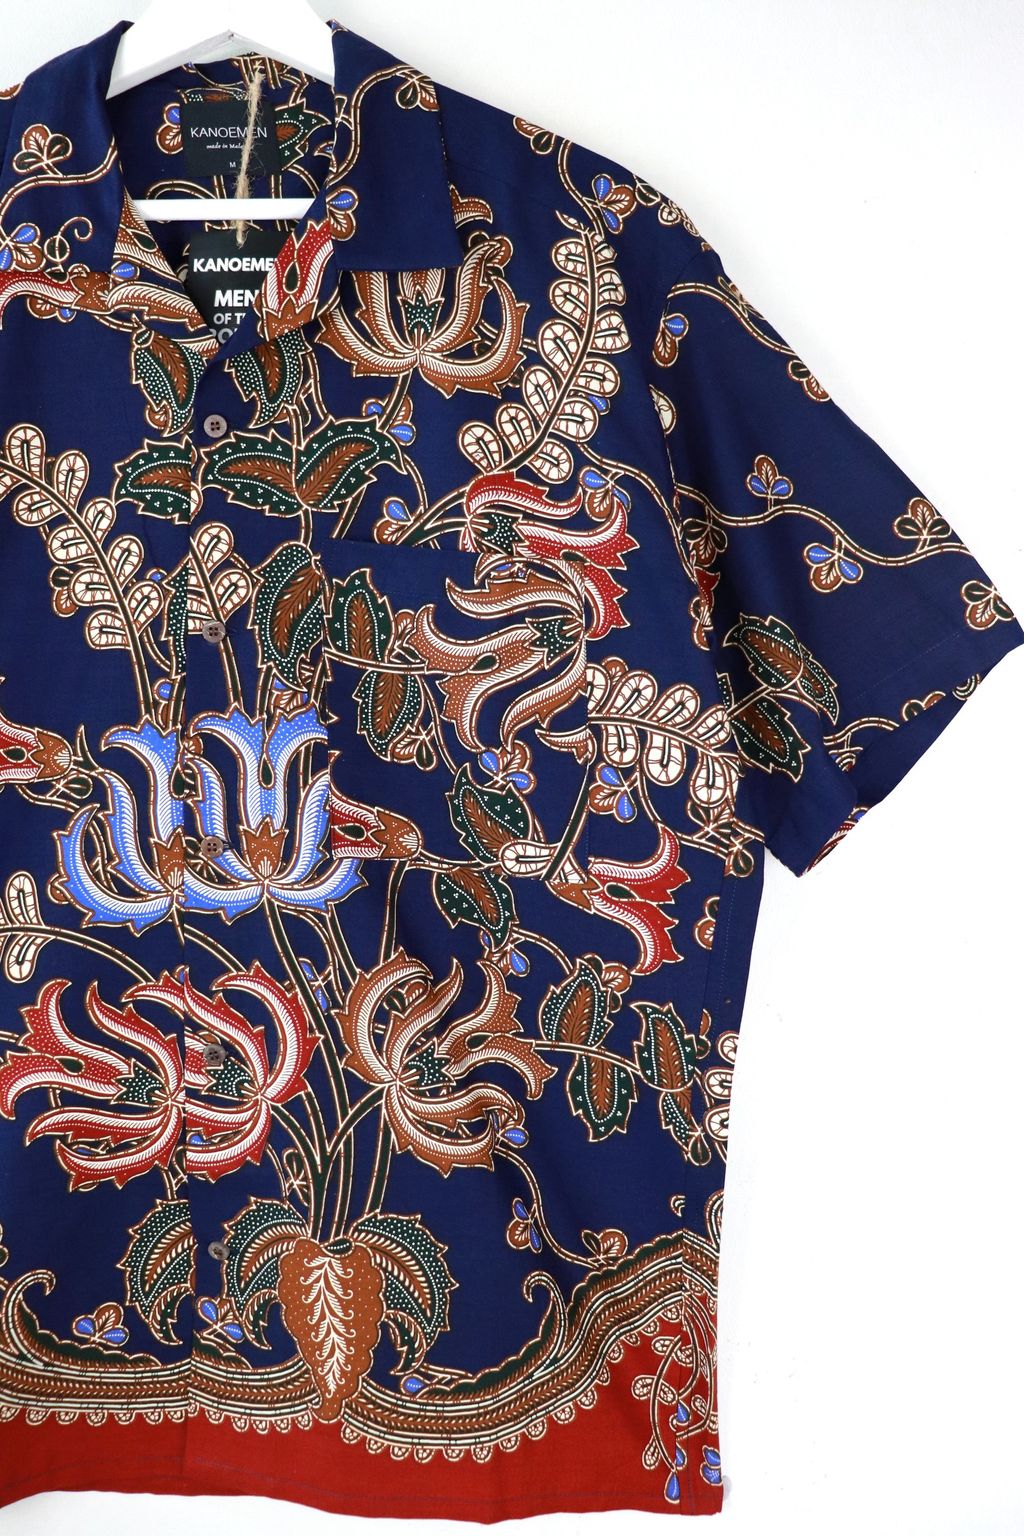 kanoemen-open-collared-batik-shirt-3